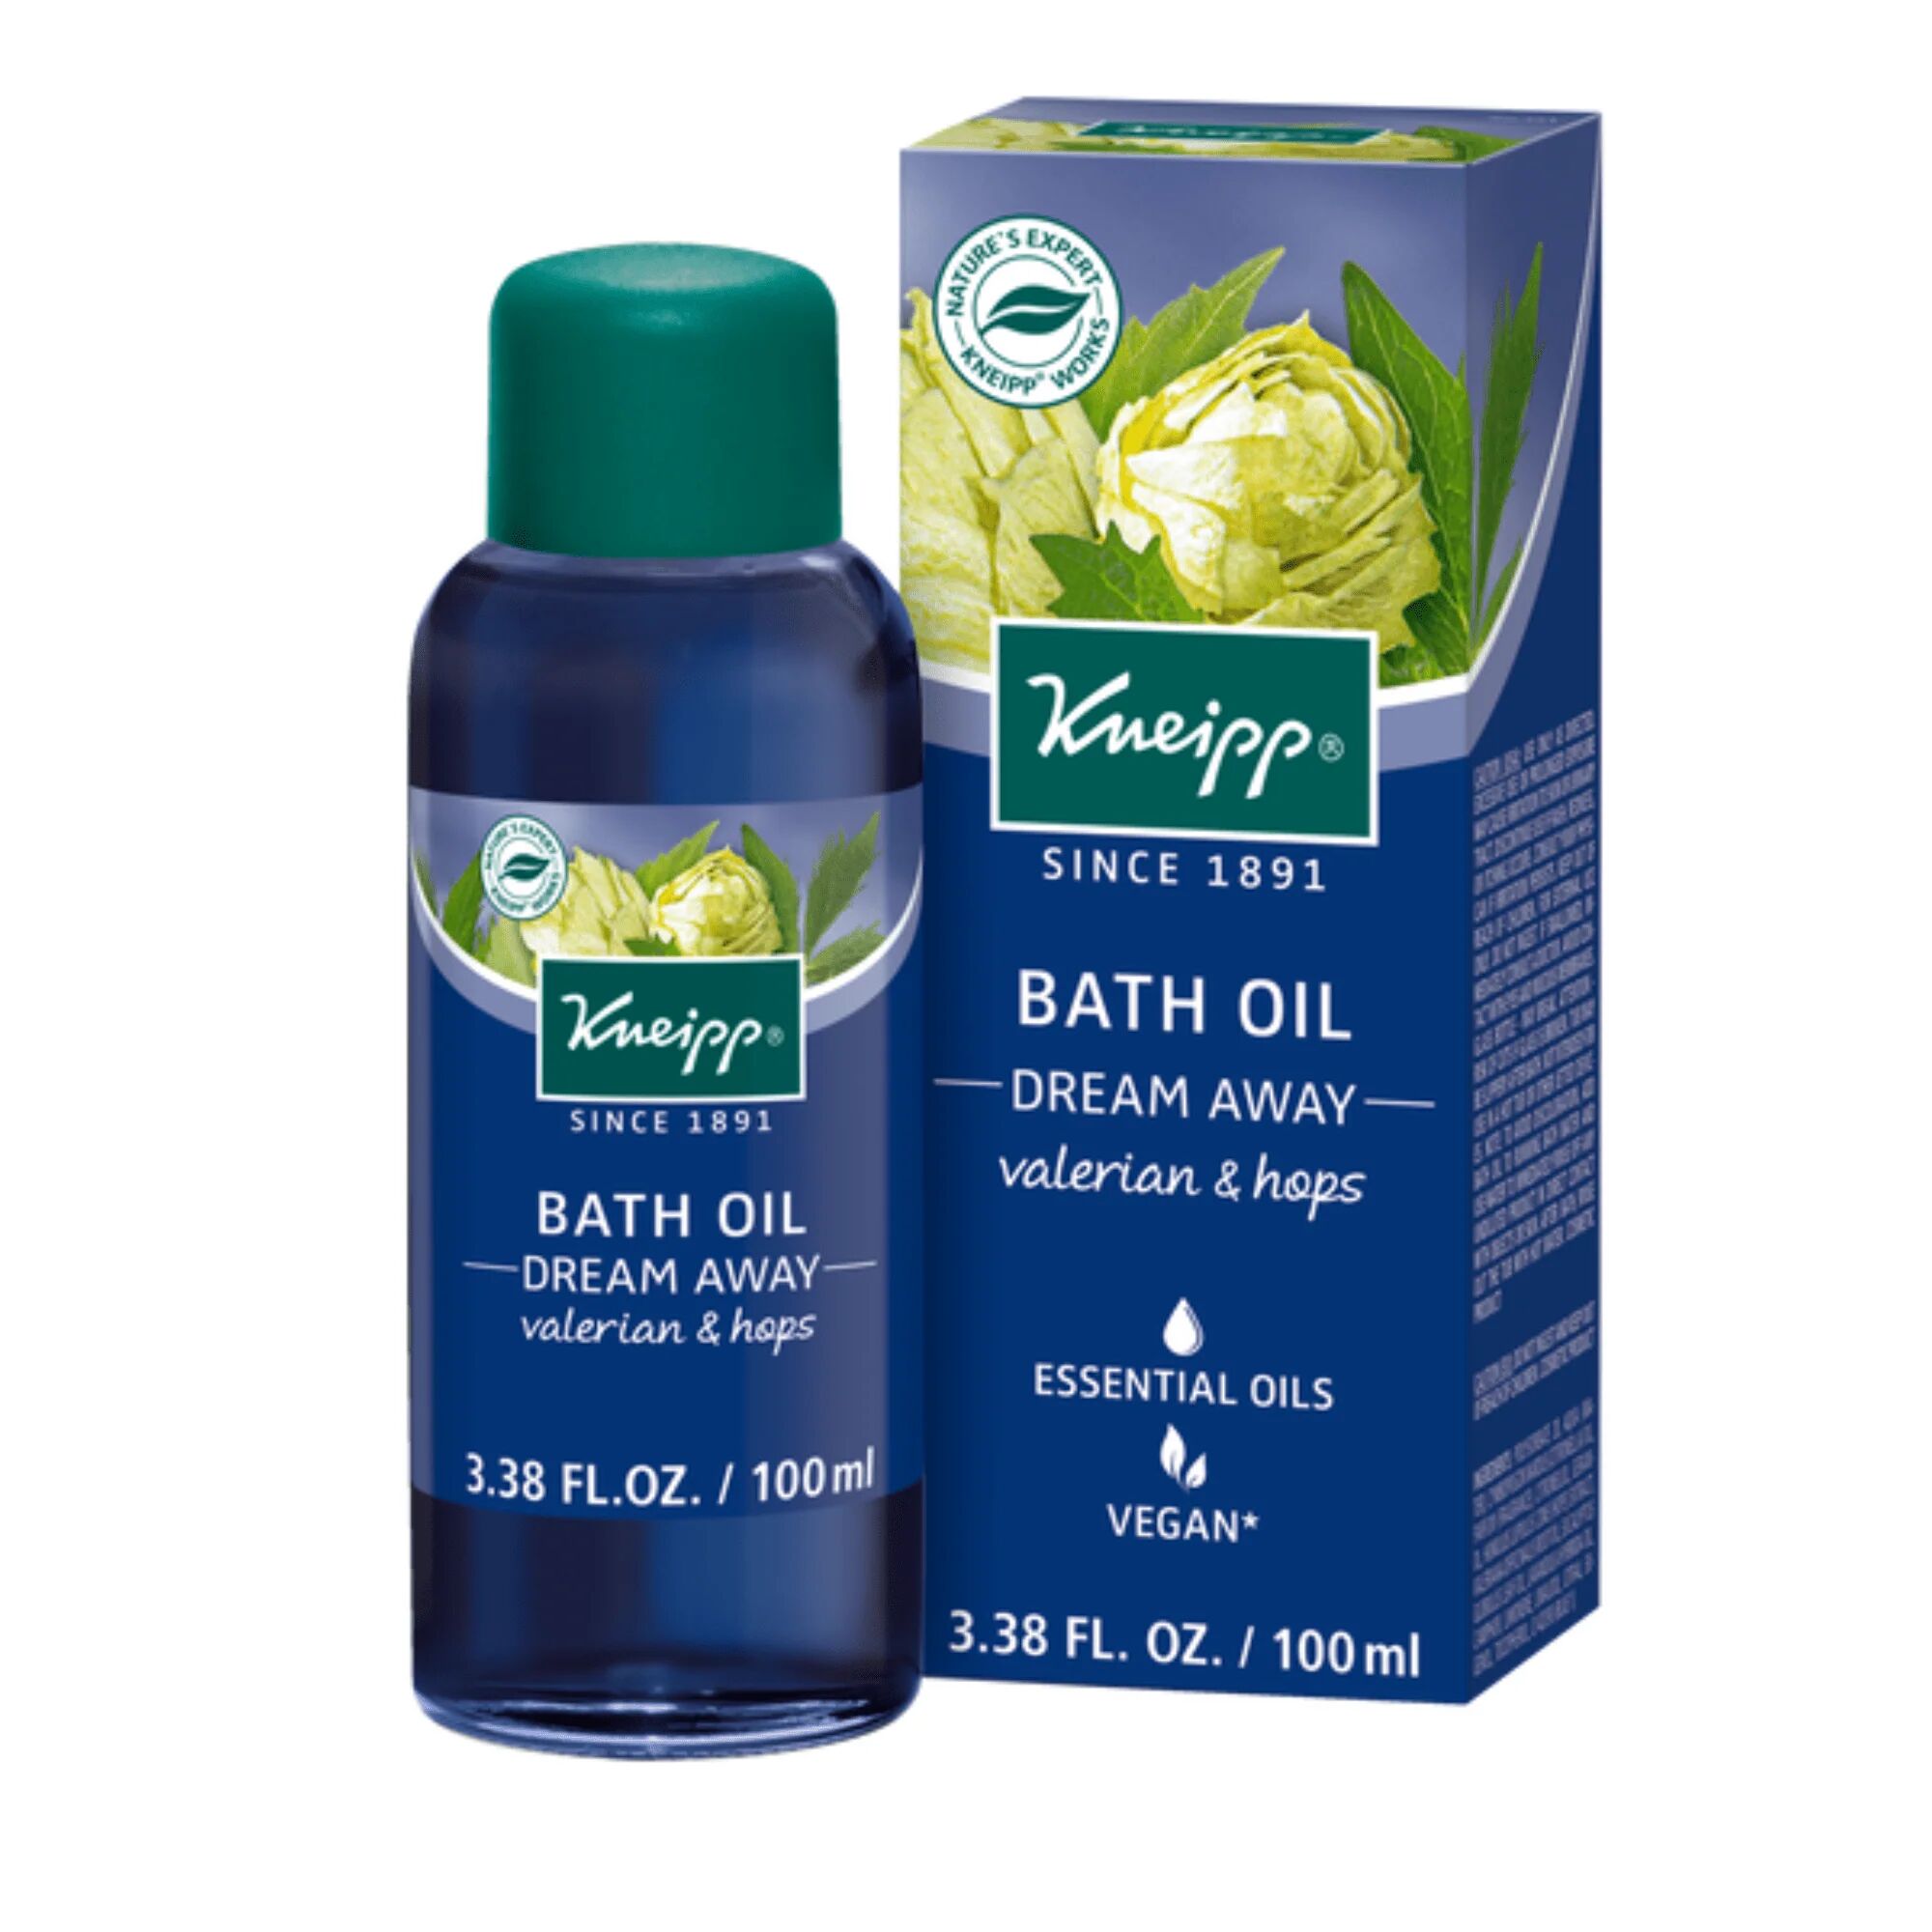 Kneipp Valerian & Hops Dream Away Bath Oil (3.38 fl oz) #11856